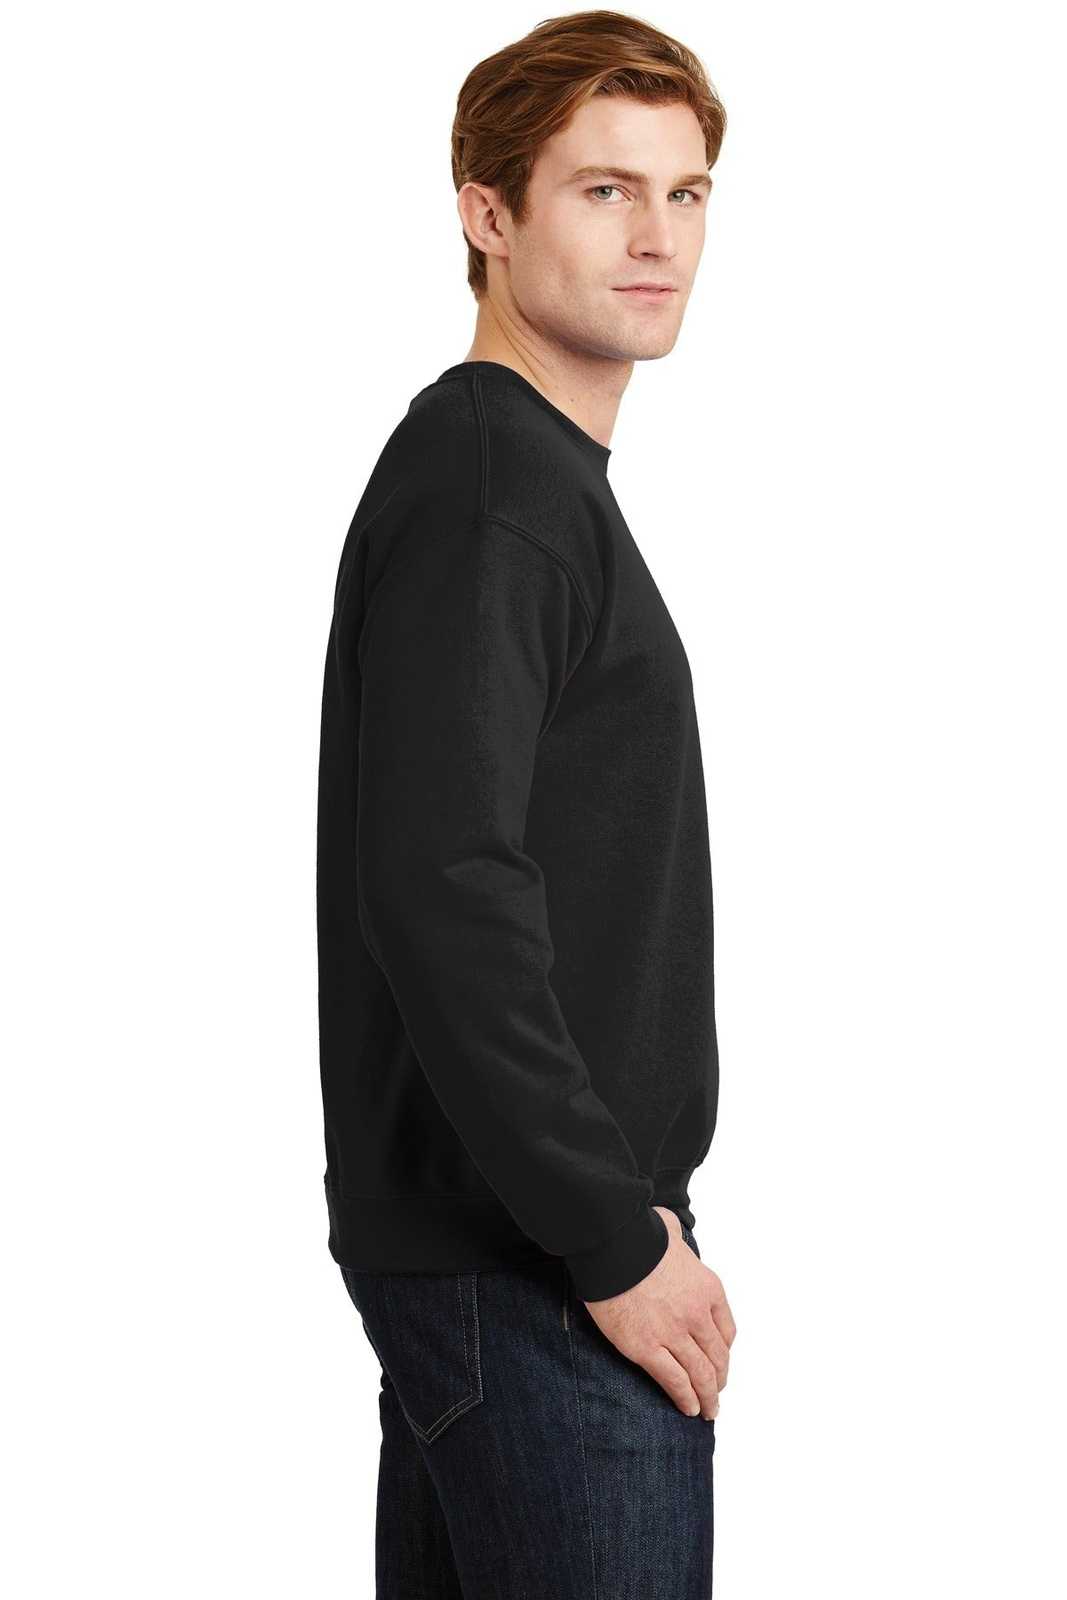 Gildan 18000 Heavy Blend Crewneck Sweatshirt - Black